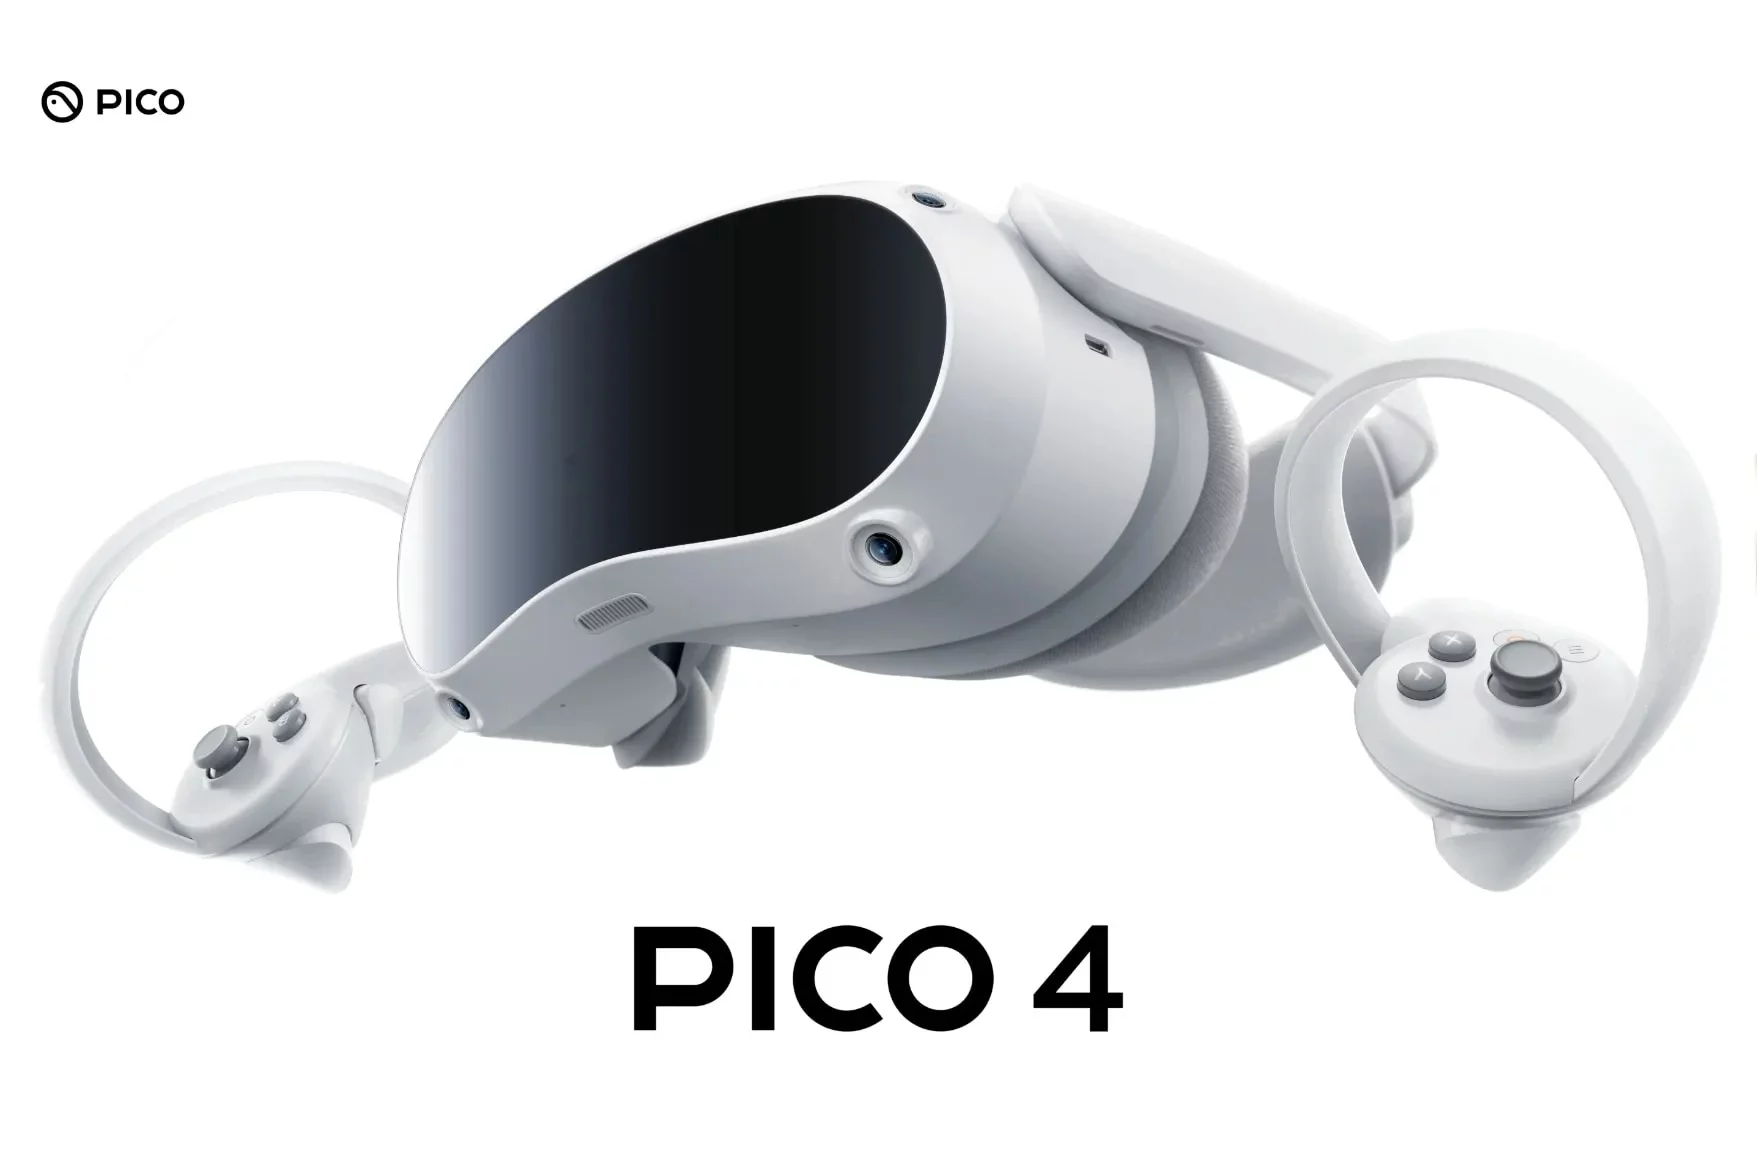 Pico 4 VR headset floats on a se jpeg